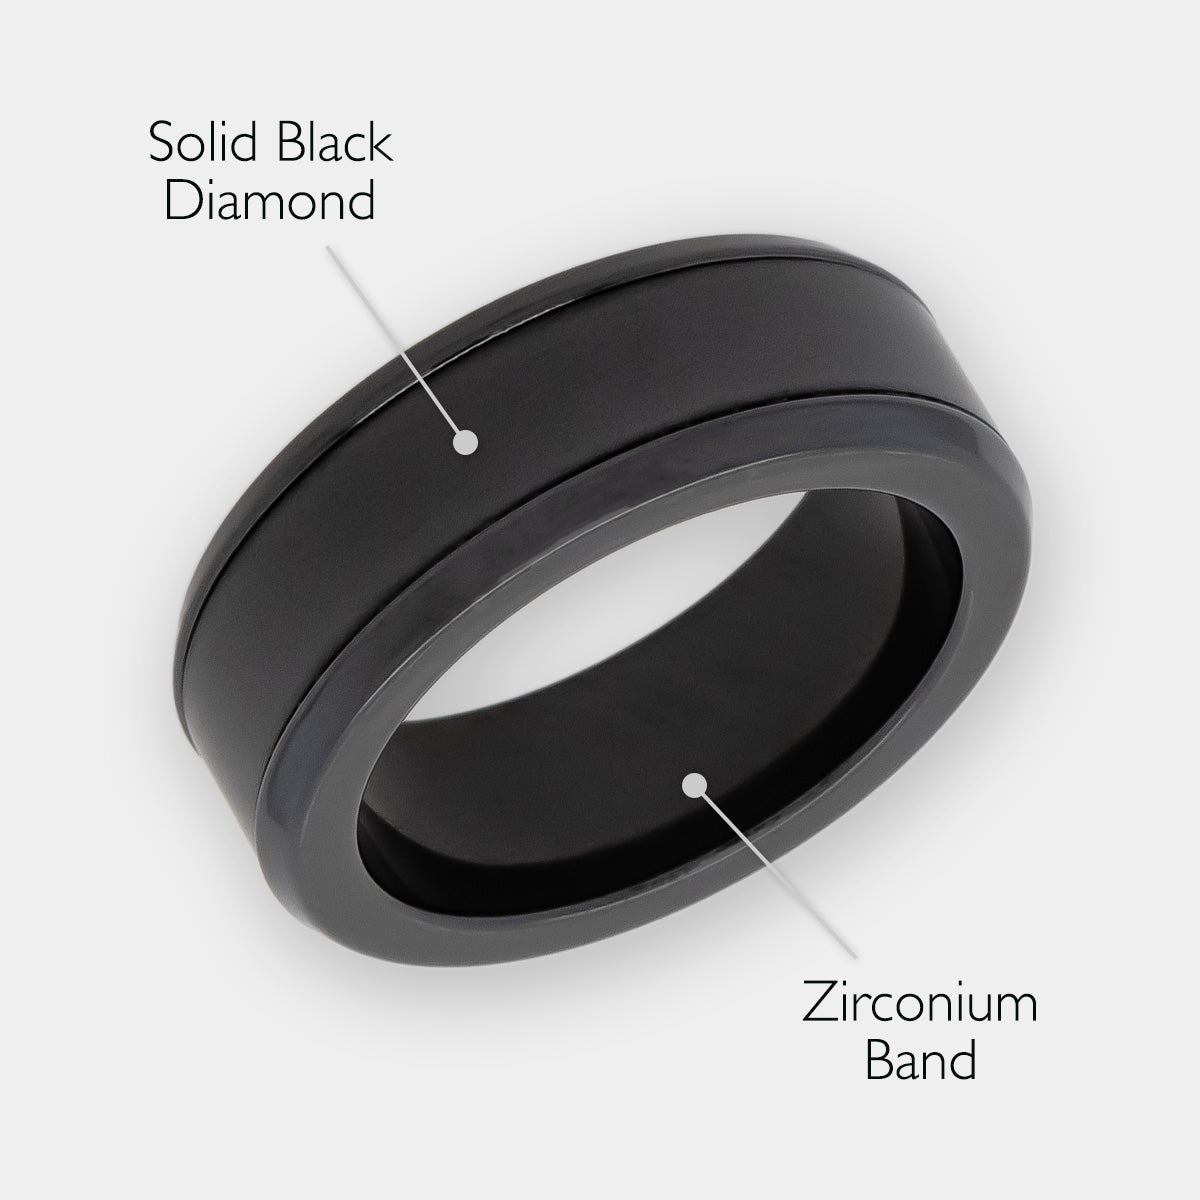 ACTEON 8mm - Size 9 - Polished Finish Zirconium w/ Black Diamond Inlay - SHIPS WITHIN 2 BUSINESS DAYS